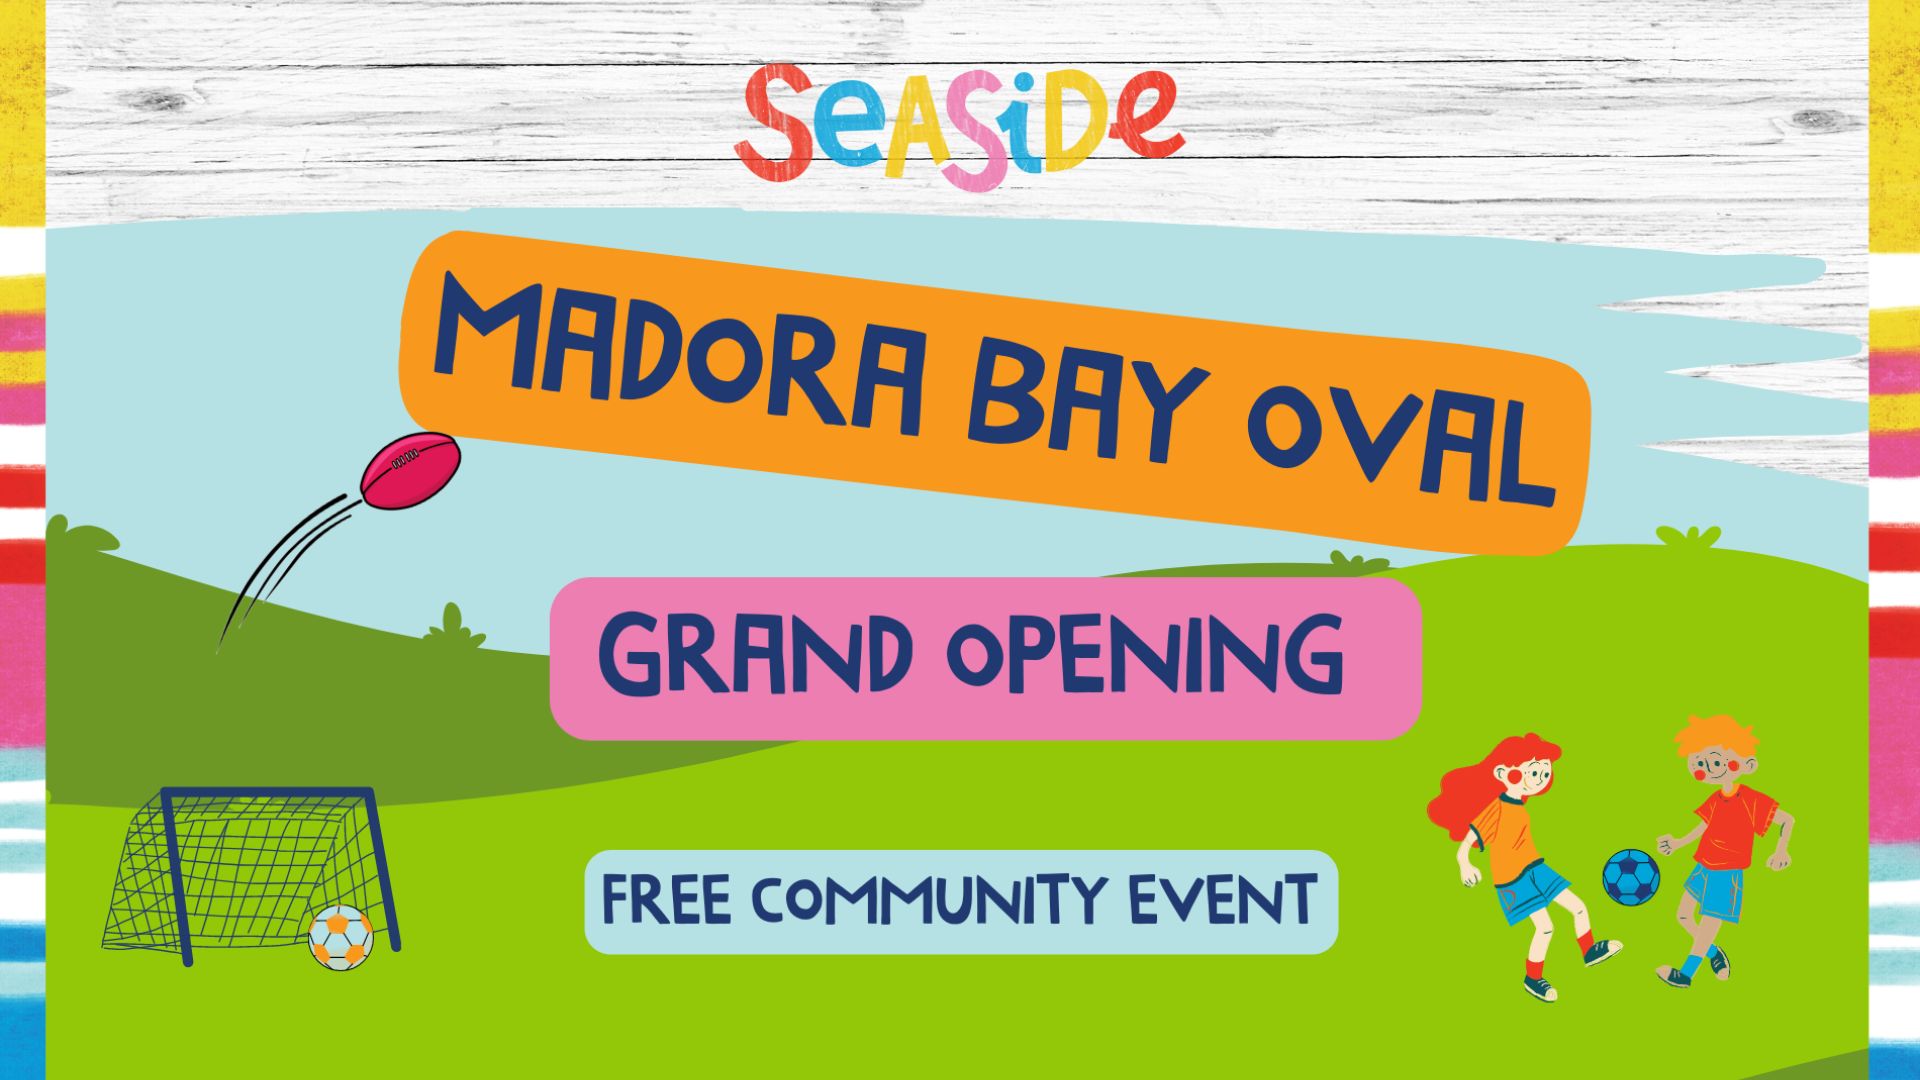 Seaside Madora Bay Grand Opening Community Event